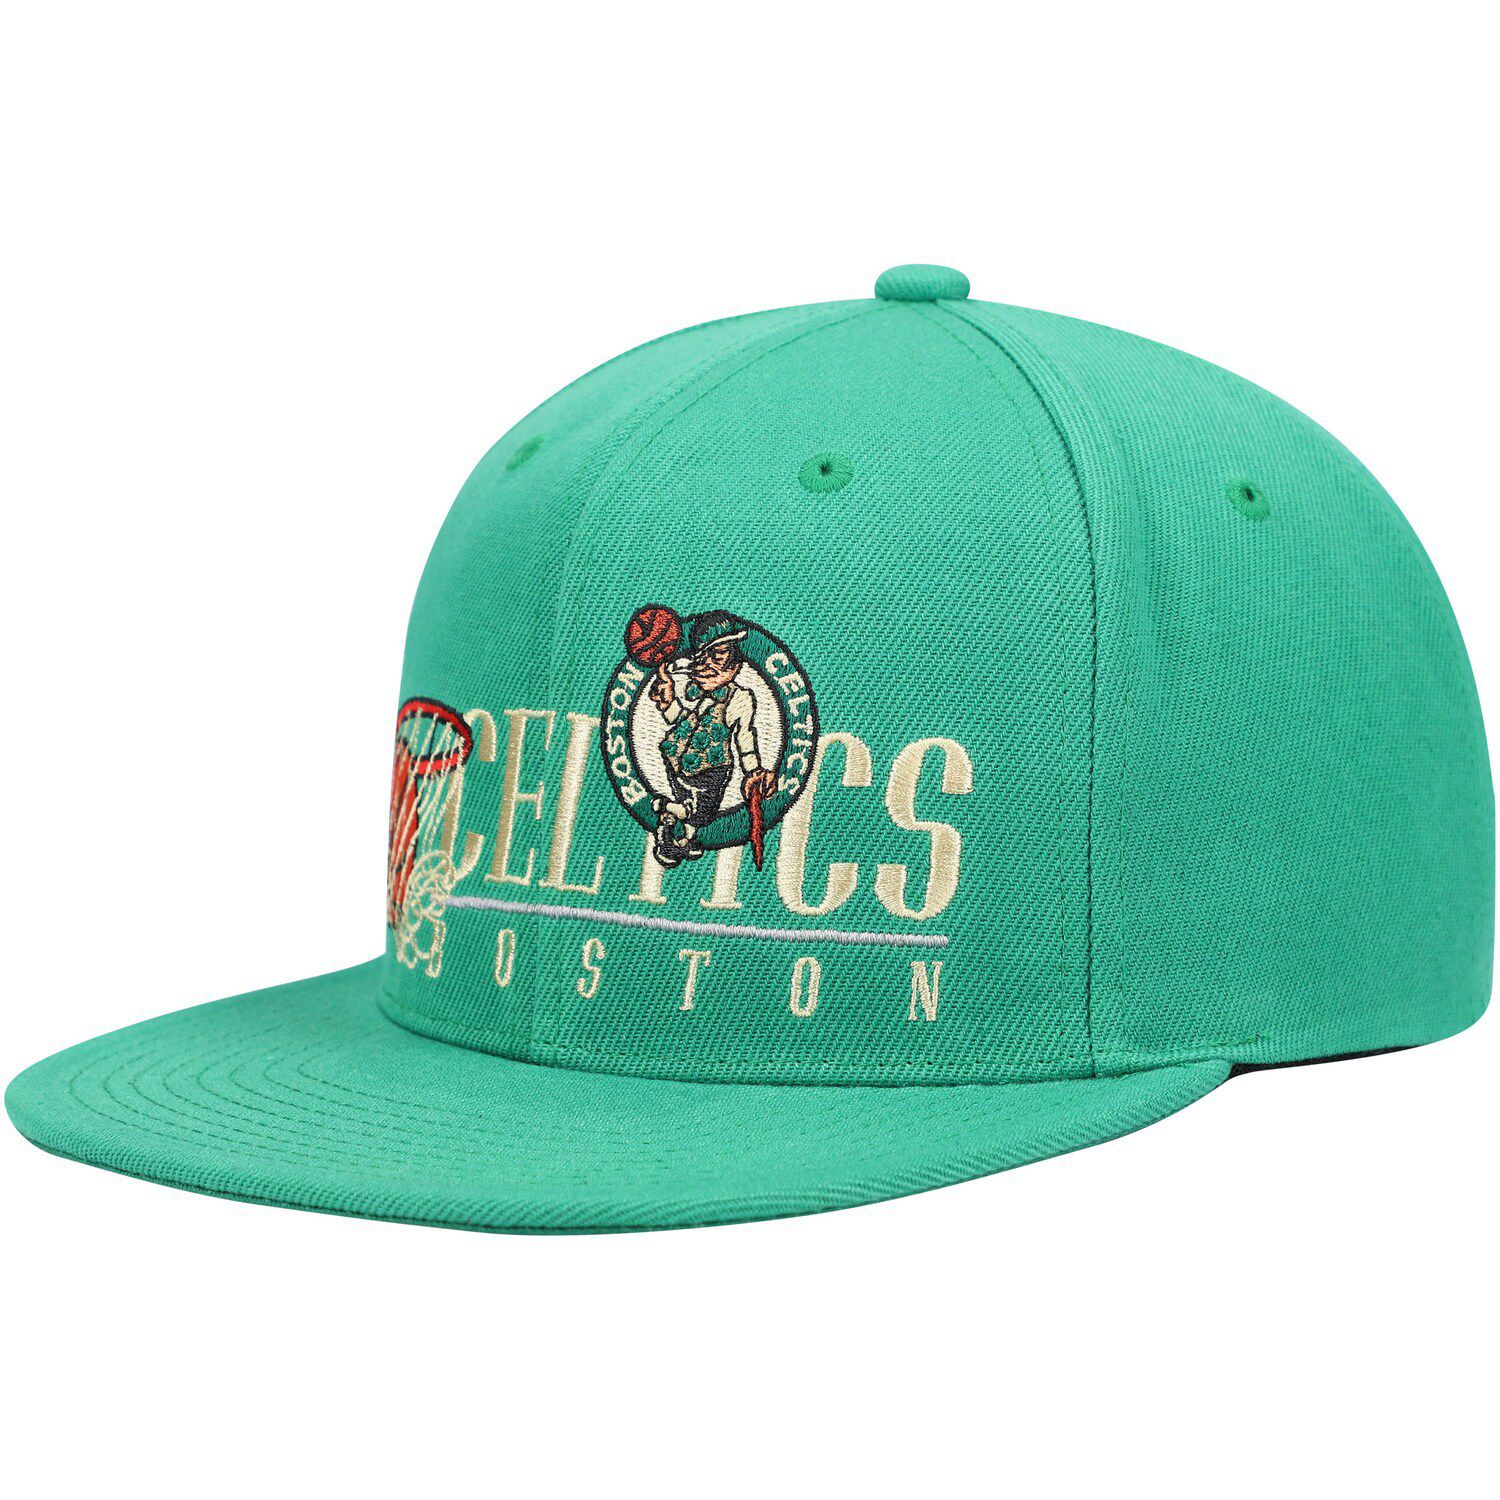 Image for Unbranded Men's Mitchell & Ness Kelly Green Boston Celtics Hardwood Classics Vintage 2 Adjustable Snapback Hat at Kohl's.